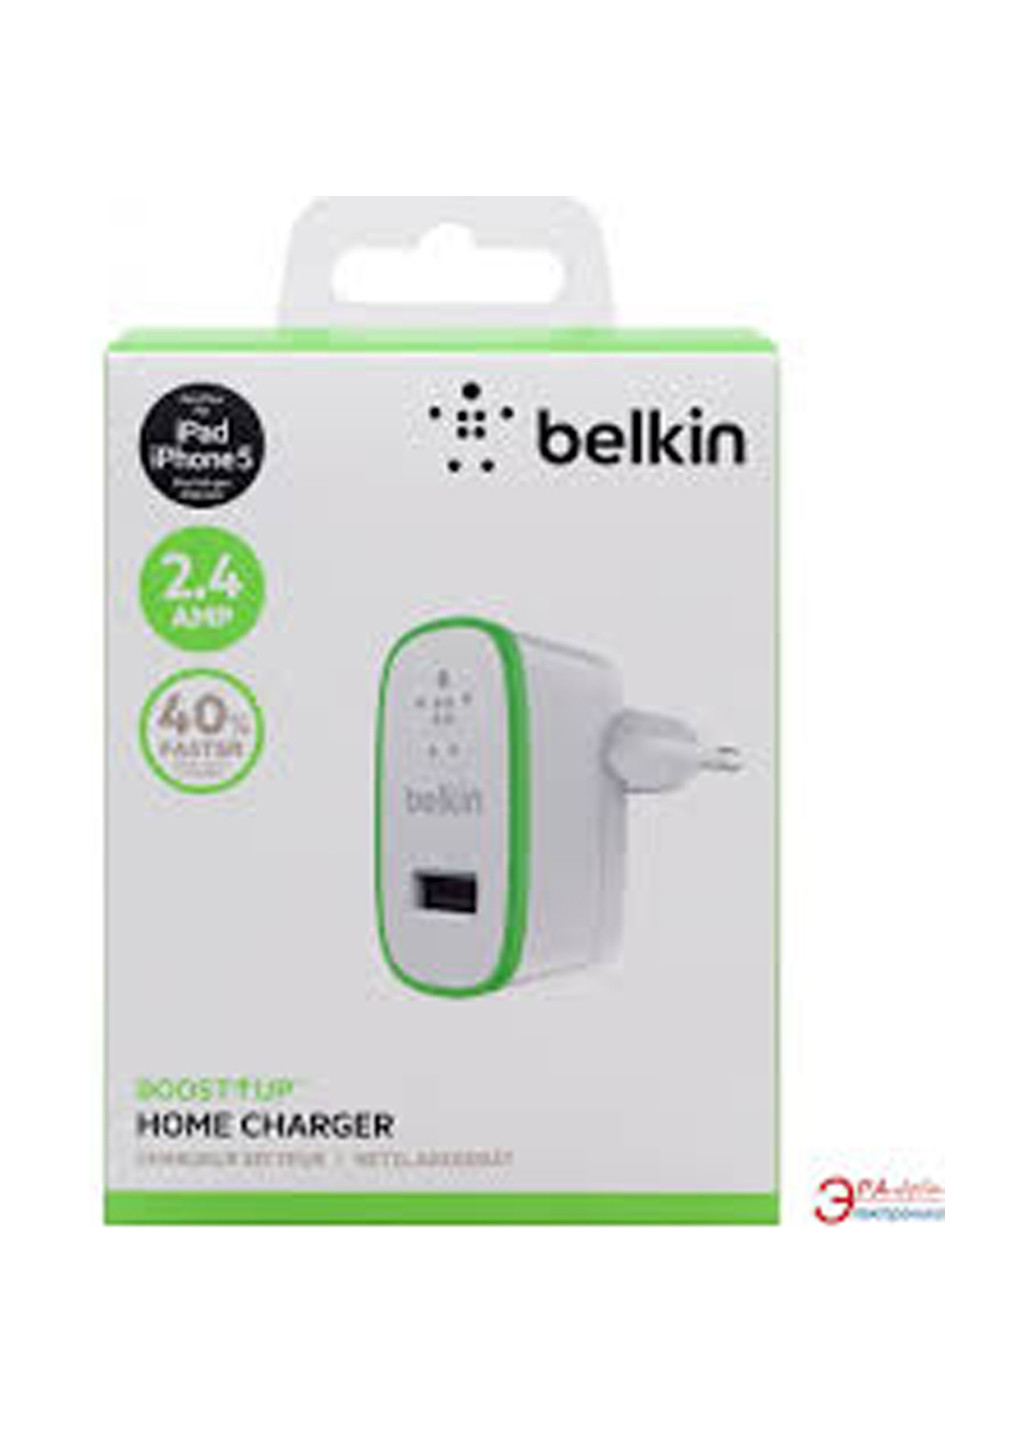 Сетевое ЗУ Belkin USB HomeCharger (USB 2.4Amp), Белый (F8J040vfWHT) белое